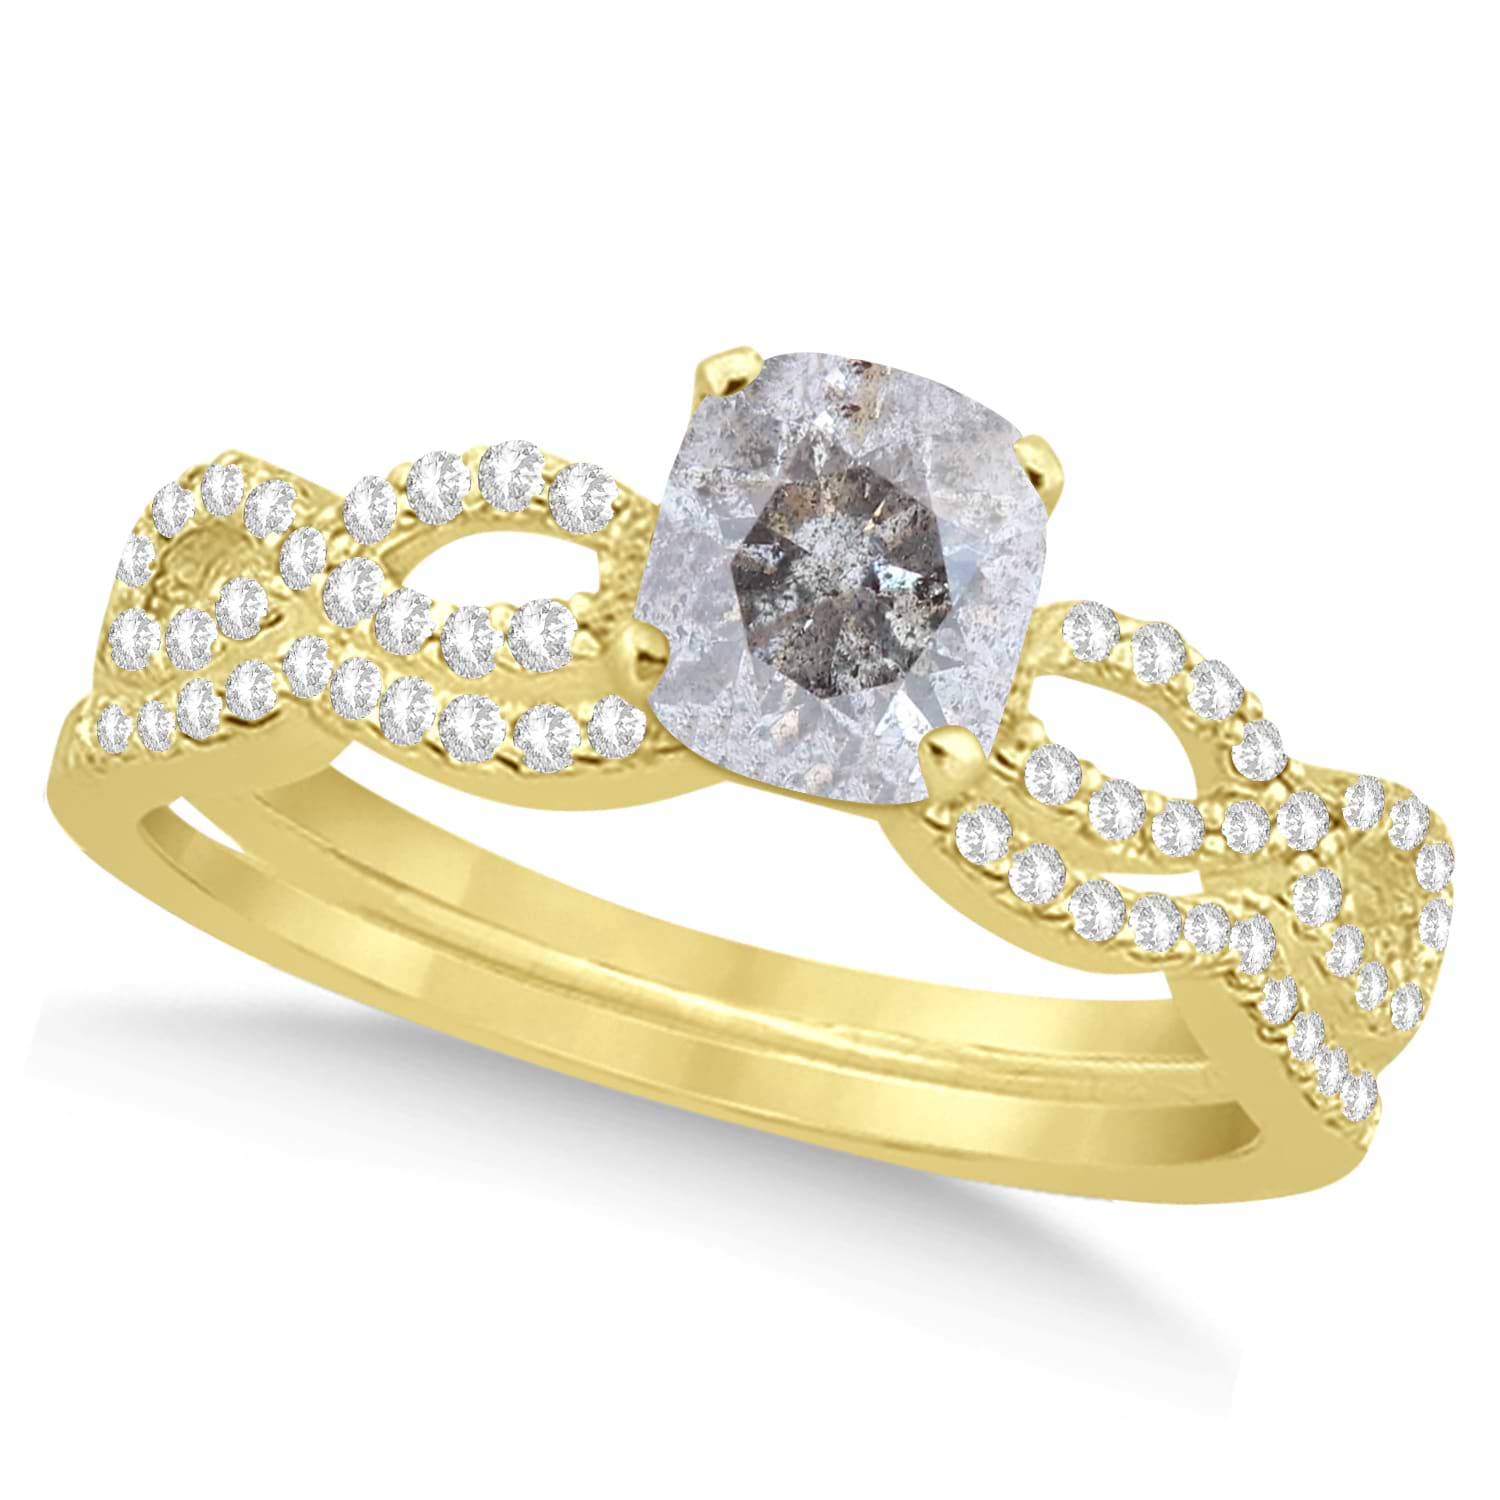 Infinity Cushion-Cut Salt & Pepper Diamond Bridal Ring Set 14k Yellow Gold (0.63ct)